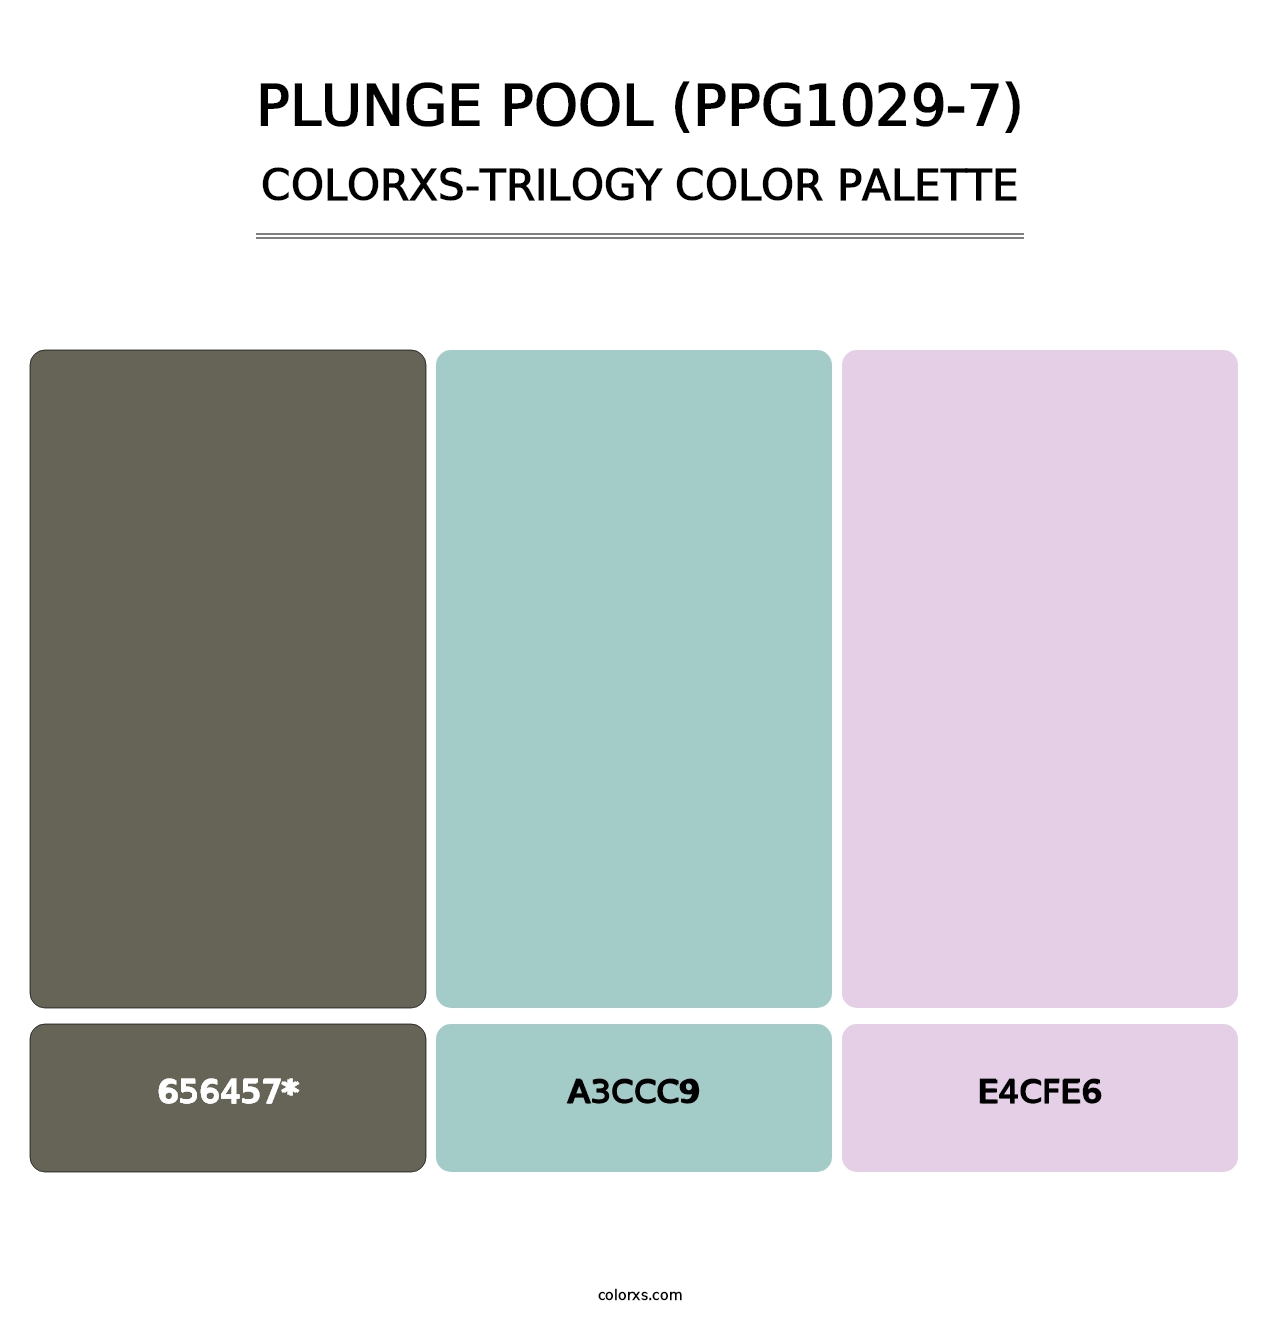 Plunge Pool (PPG1029-7) - Colorxs Trilogy Palette